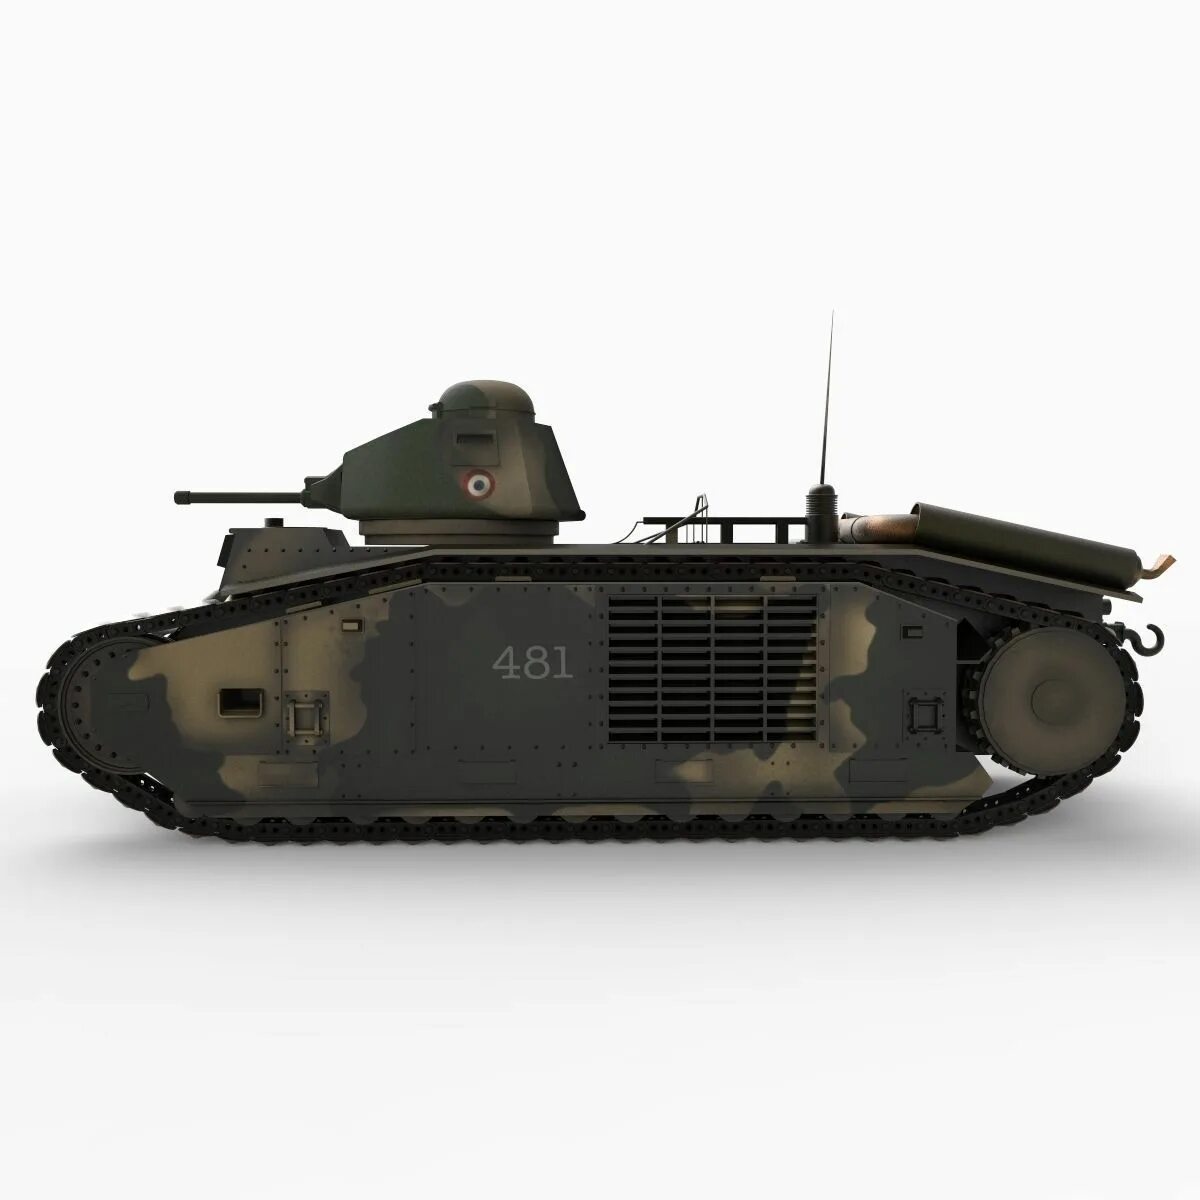 Short chars. Б1 танк. Char d3. B1 bitr. Char b1 3d model.